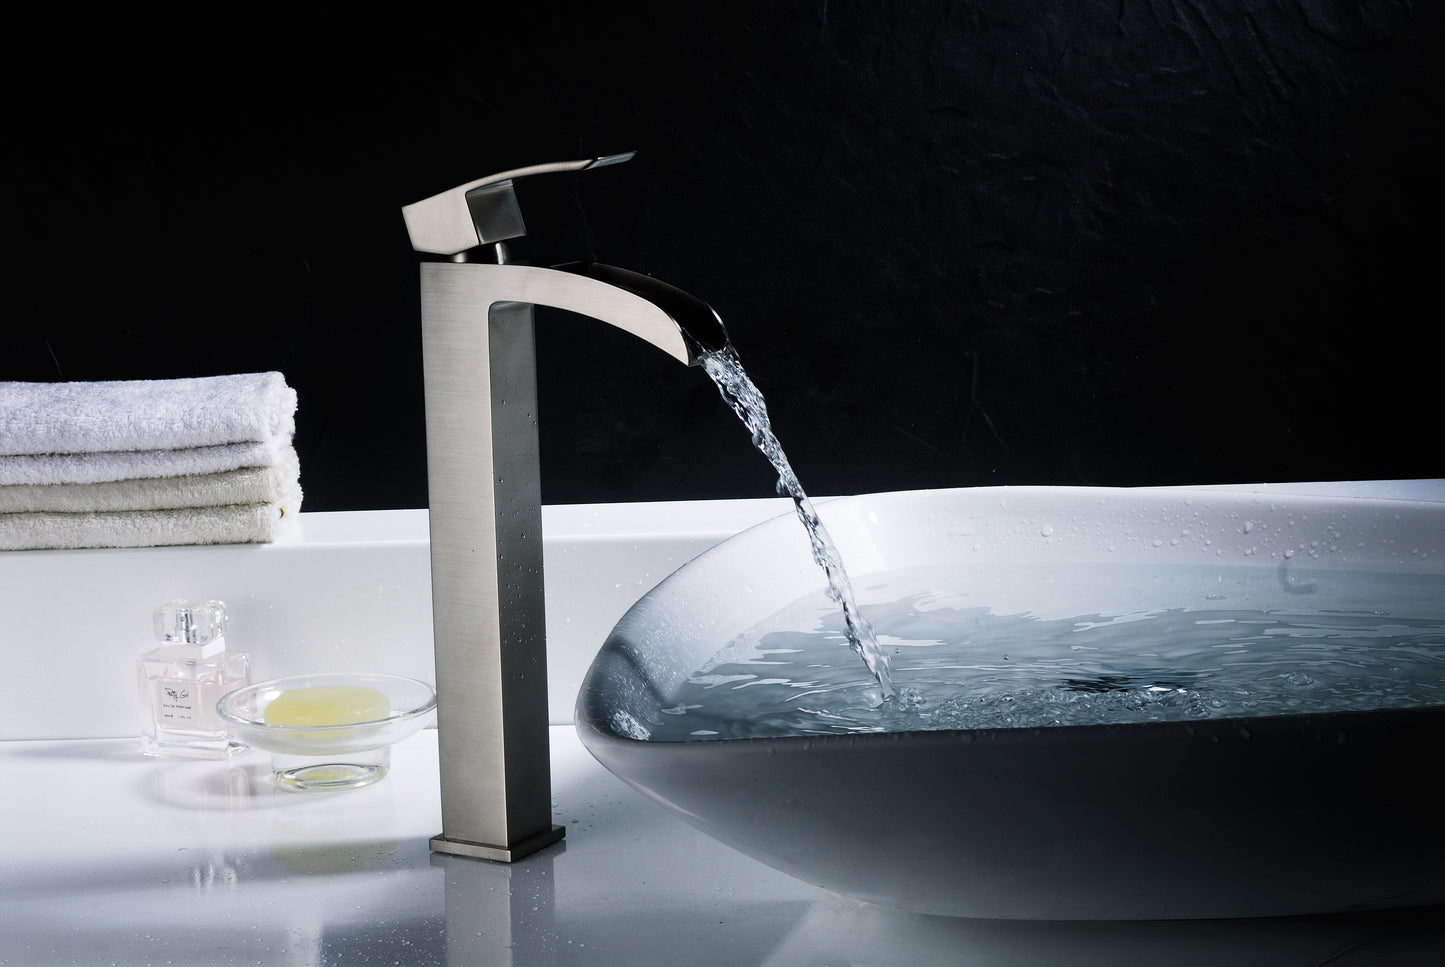 Key Series Single Hole Single-Handle Vessel Bathroom Faucet